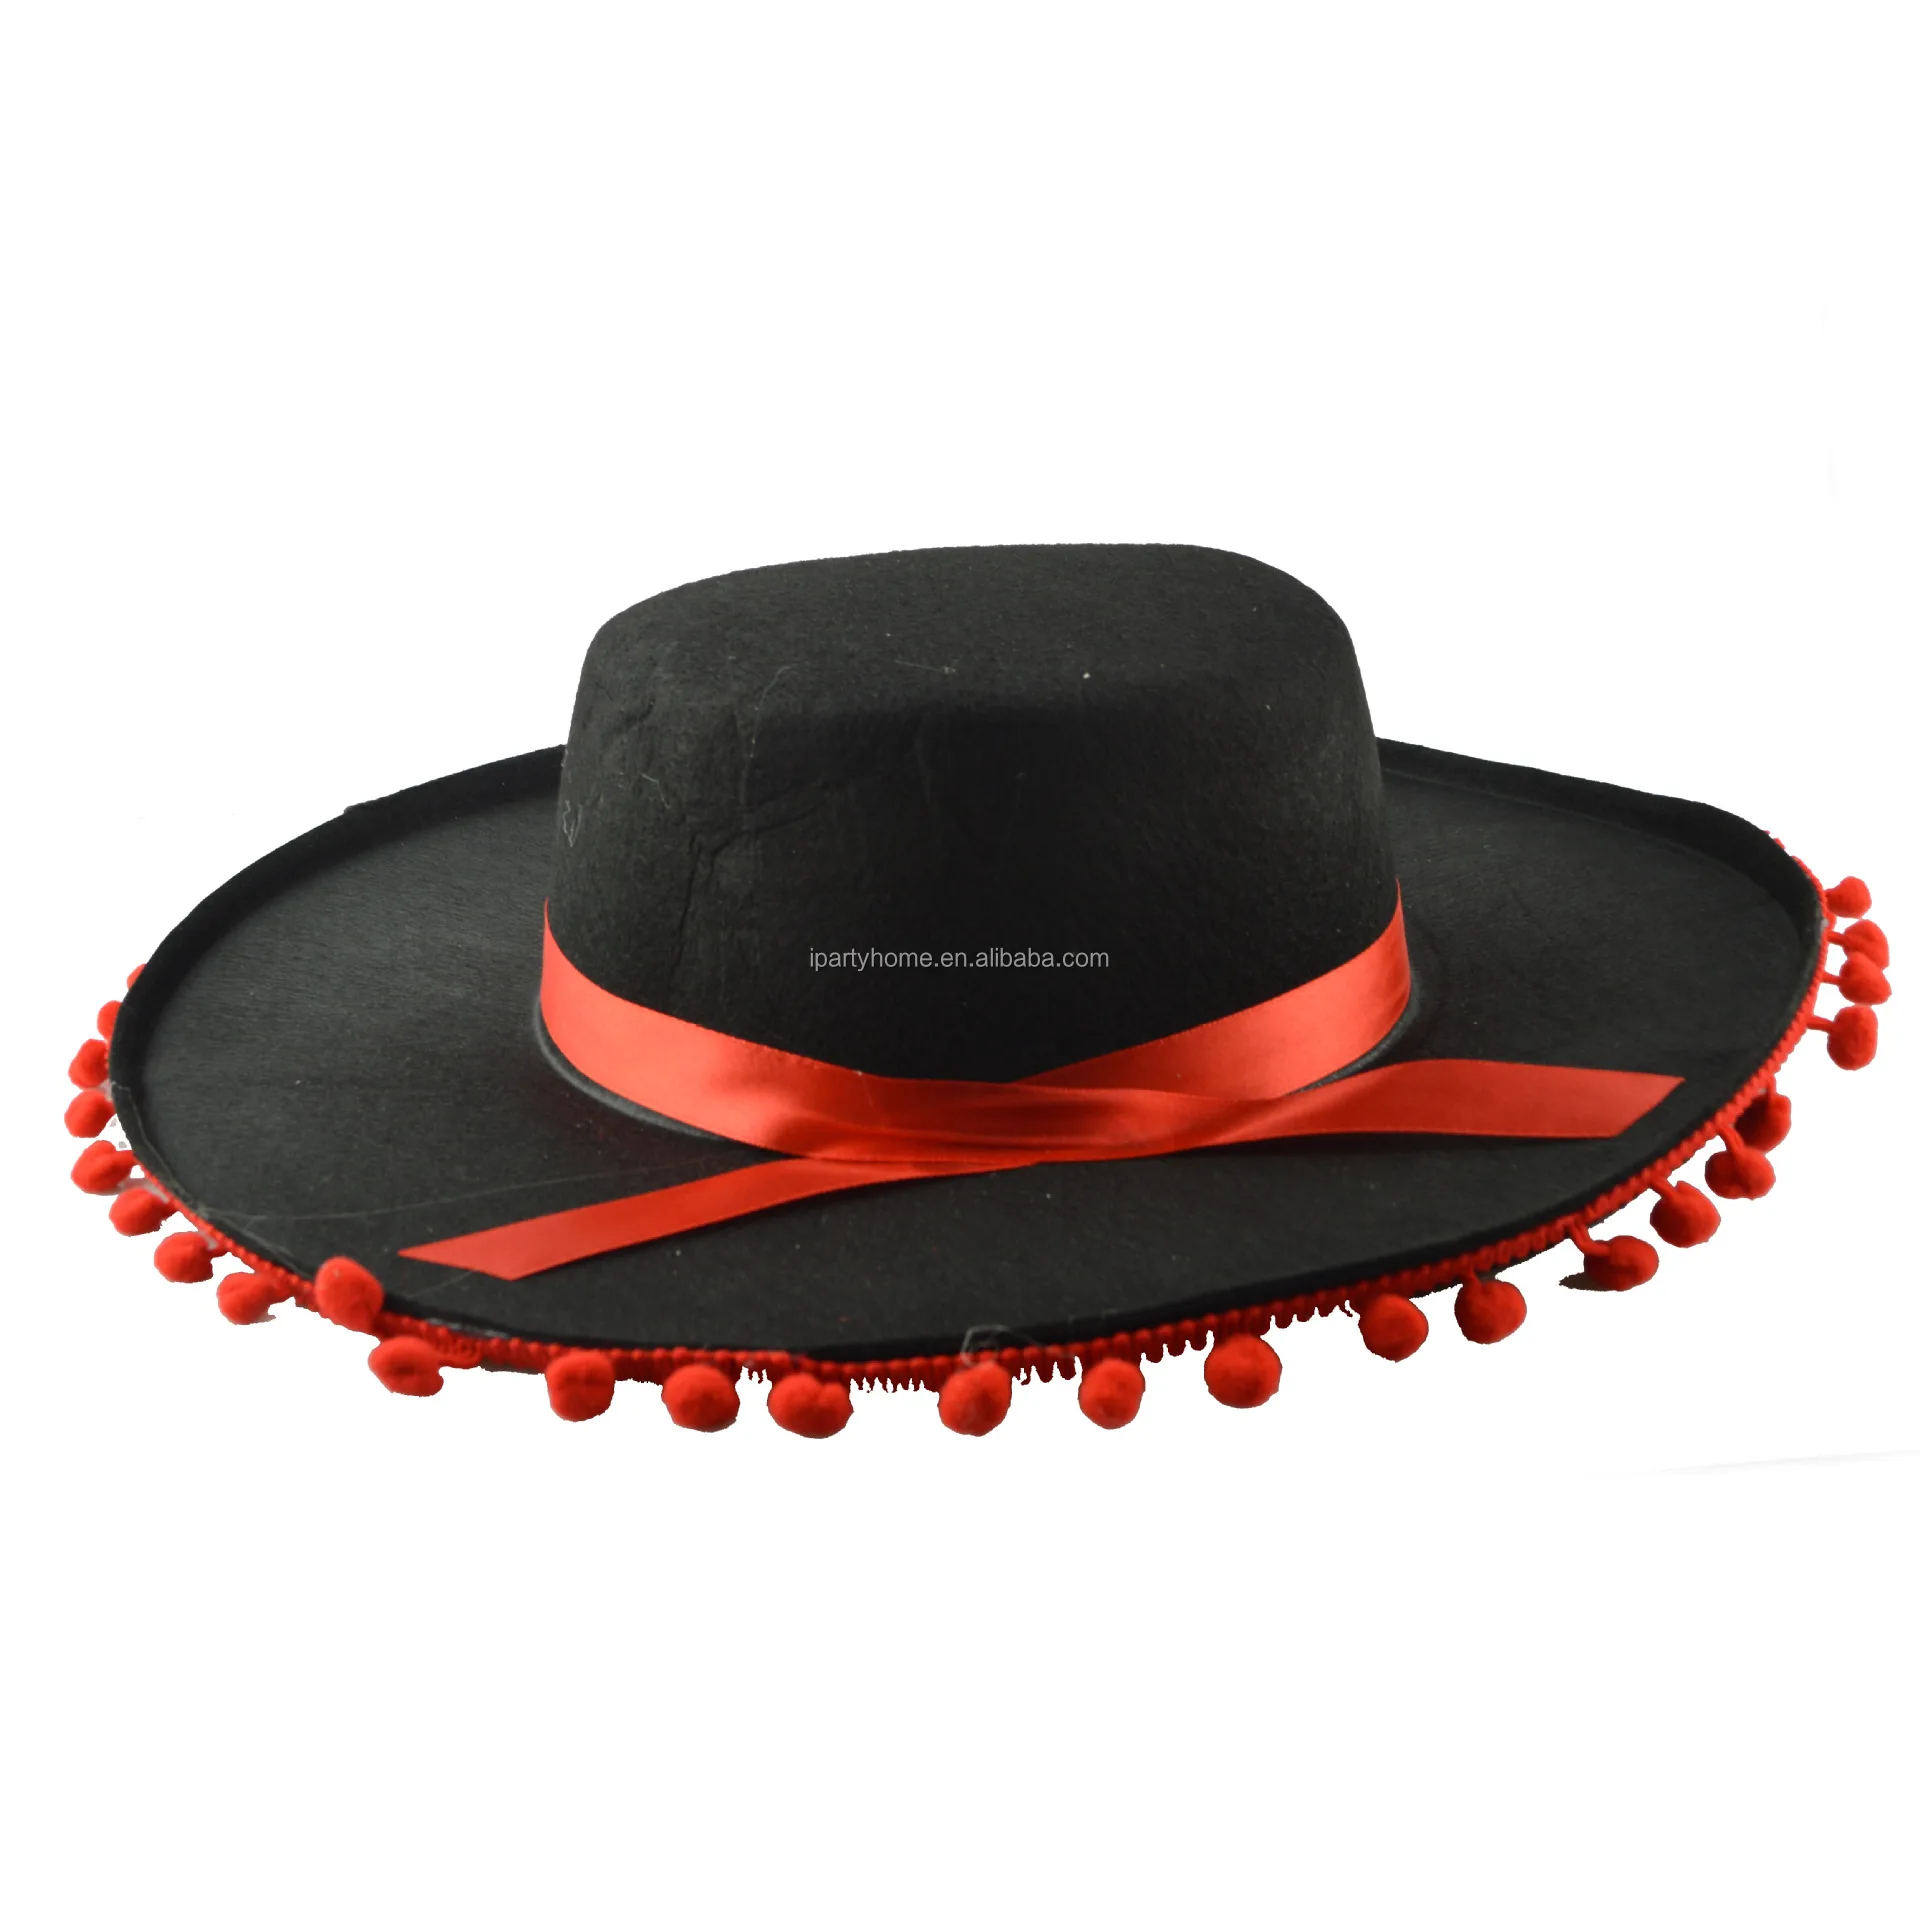 Black and Red Matador Spanish Bull Fight Hat Black Sombrero Hat From m.alibaba.com